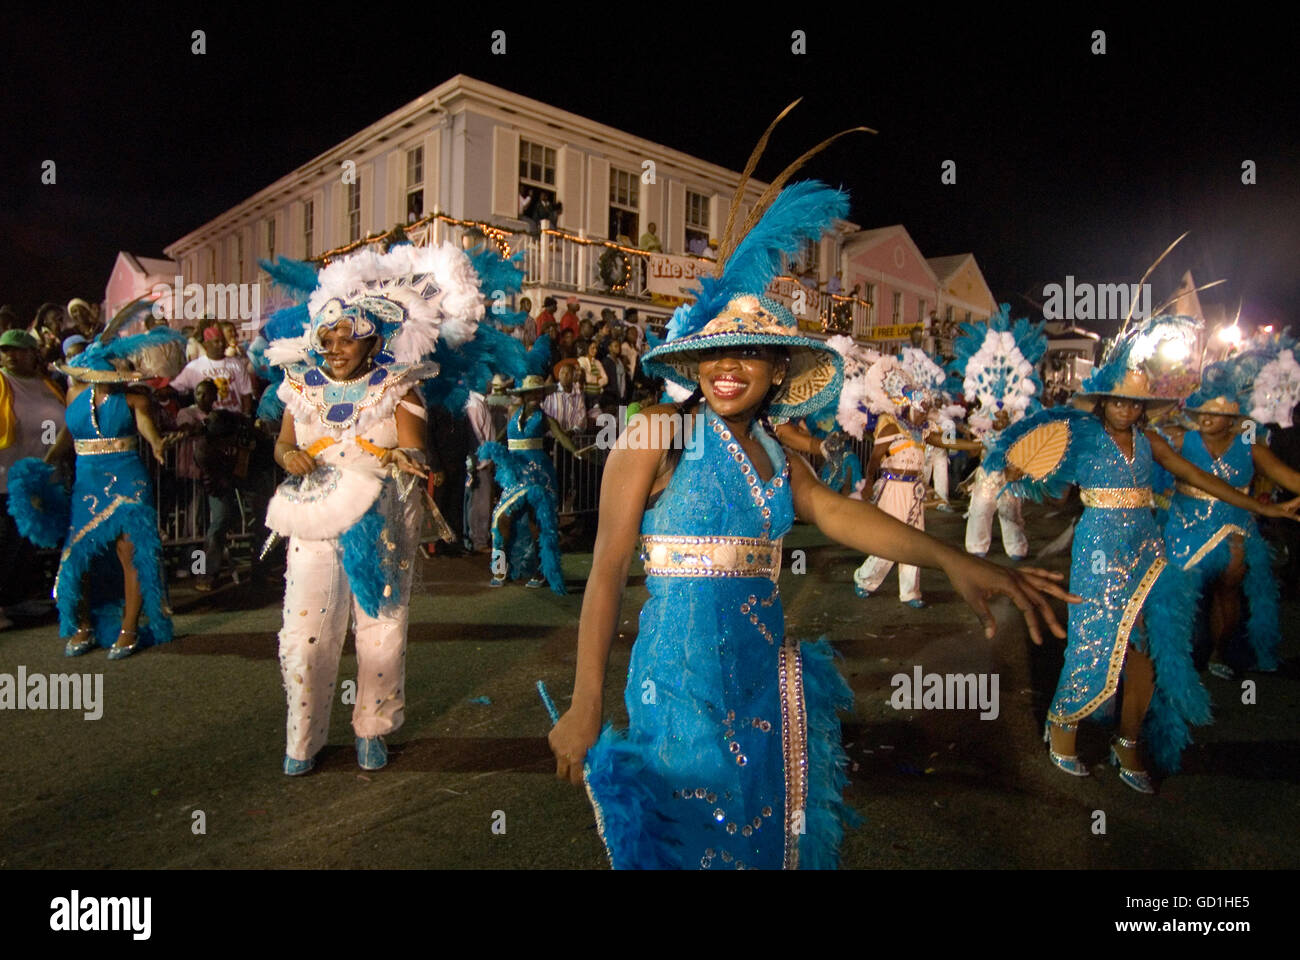 Carnaval del Junkanoo. Bay Street, Nassau, New Providence Island, Bahamas, Caribbean. New Year's Day Parade. Boxing Day. Costumed dancers celebrate the New Year with the Junkanoo Parade on January 1. Stock Photo